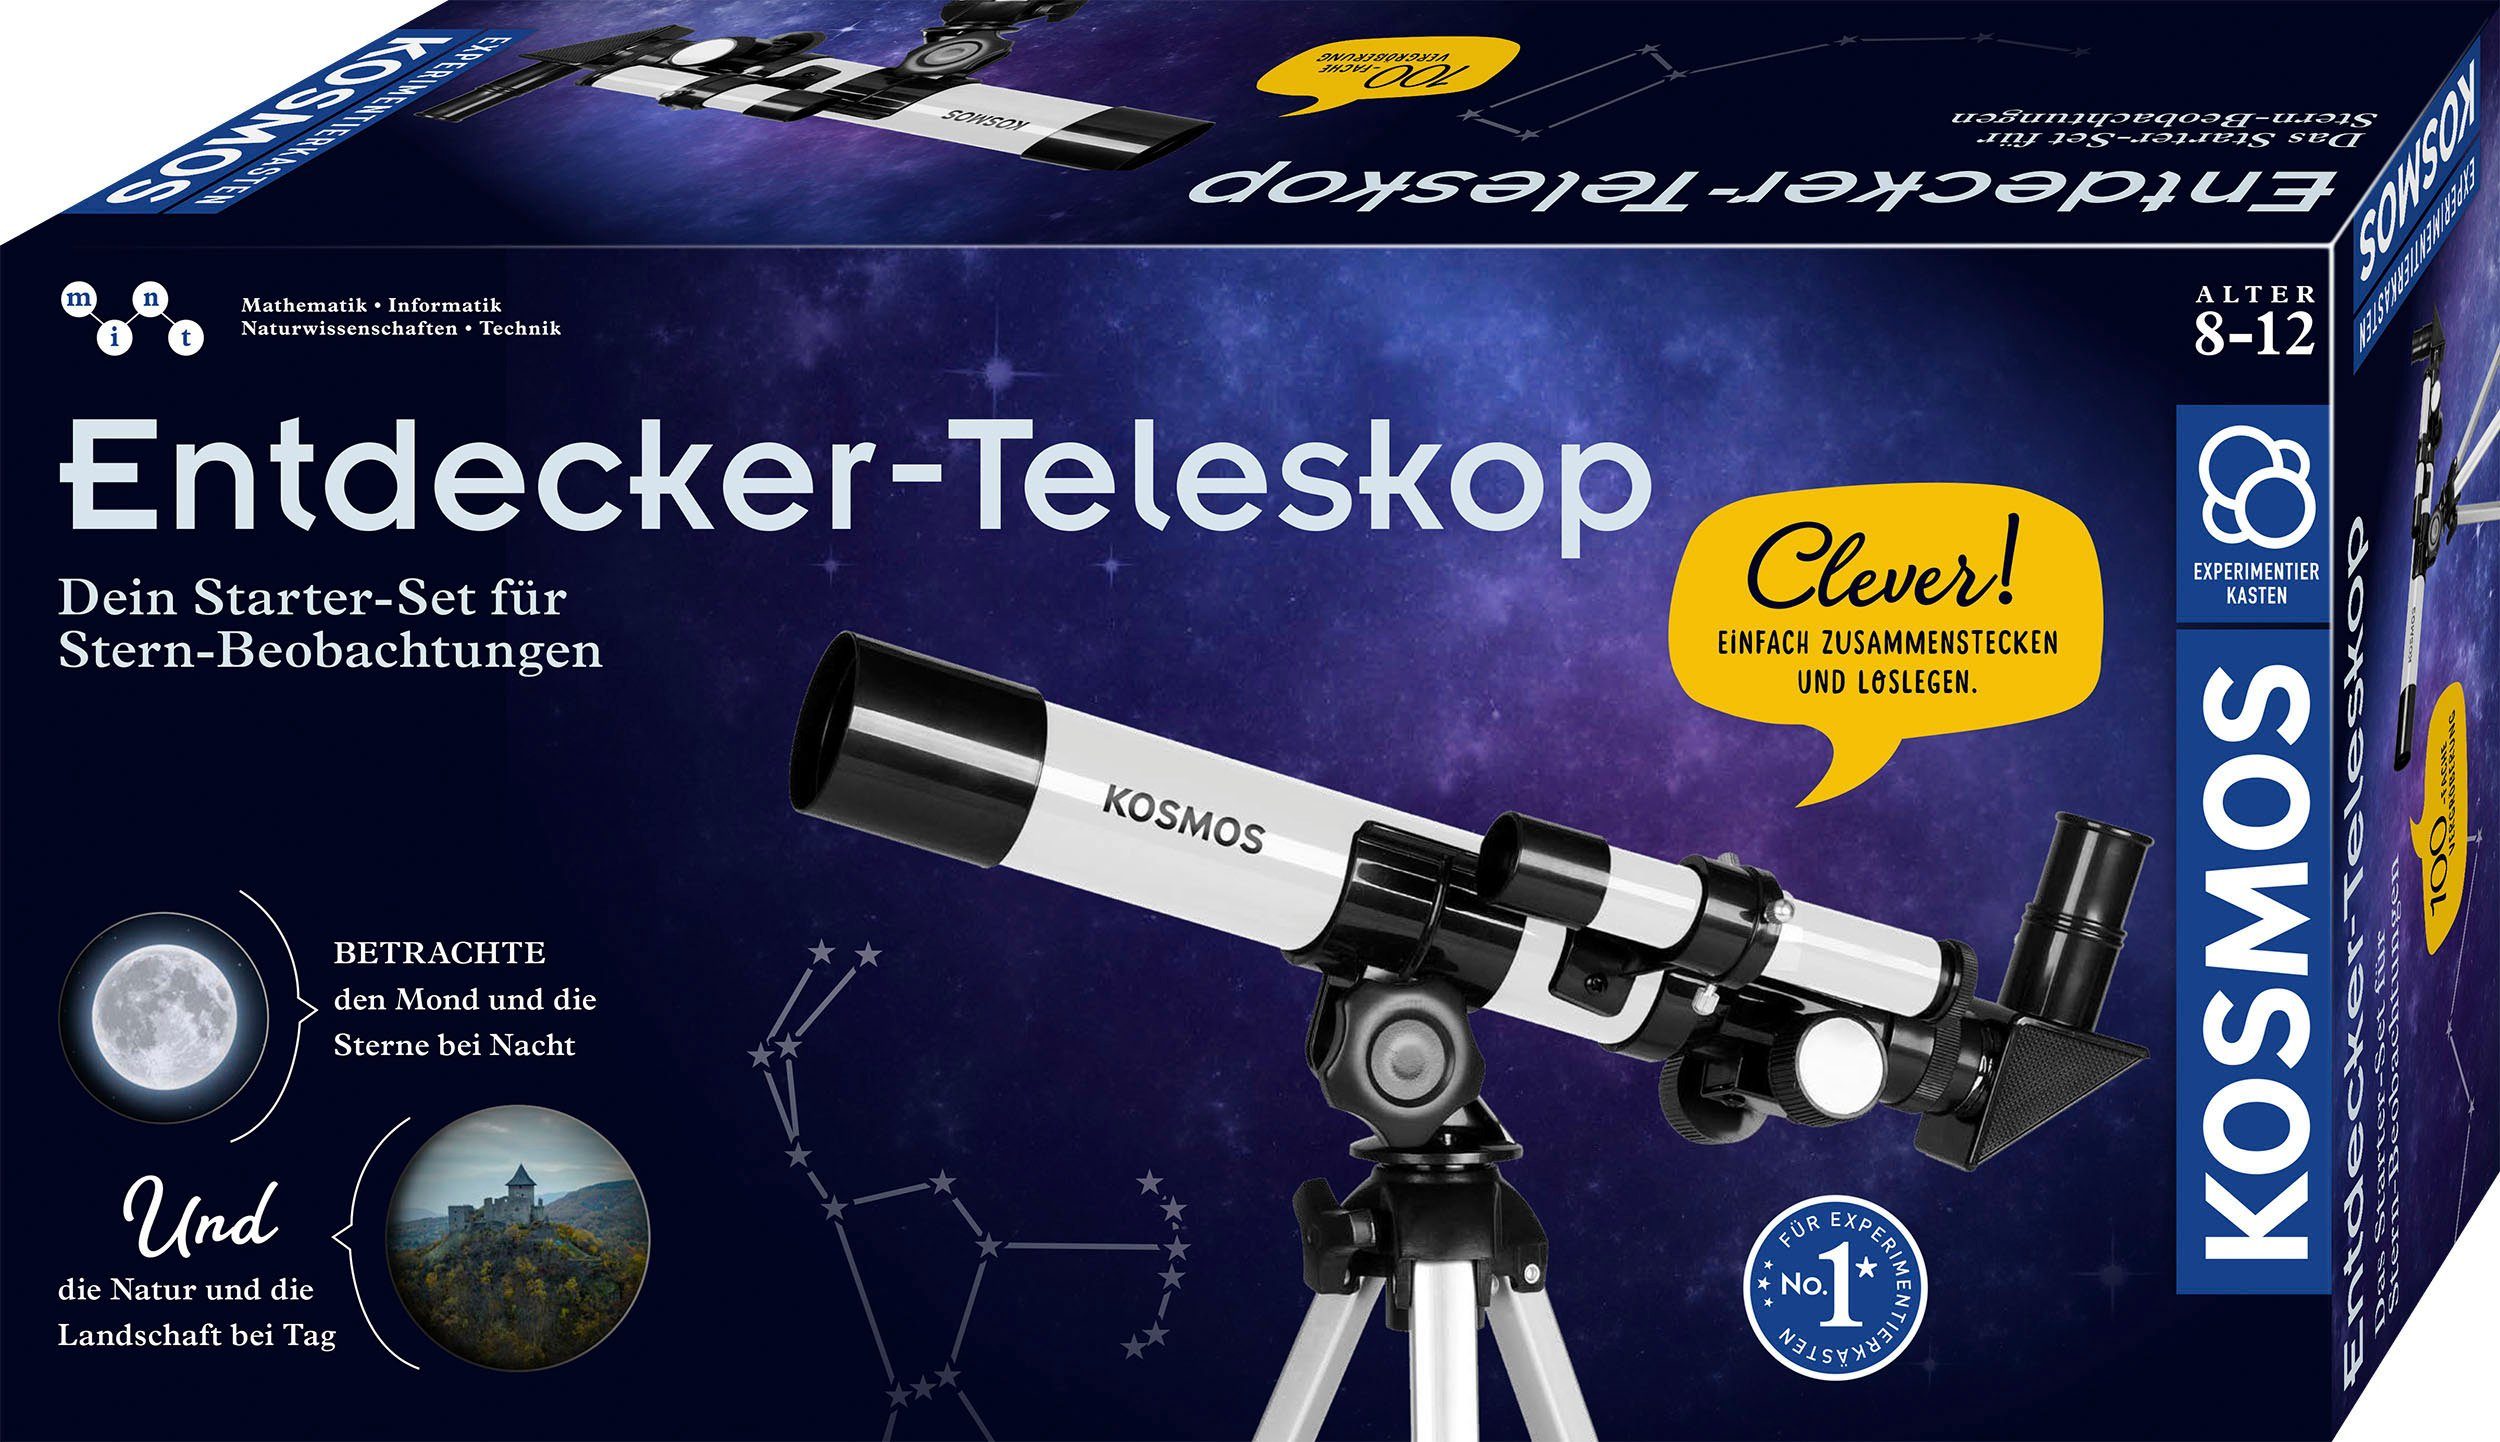 Entdecker-Teleskop, Kosmos Teleskop mit Stativ